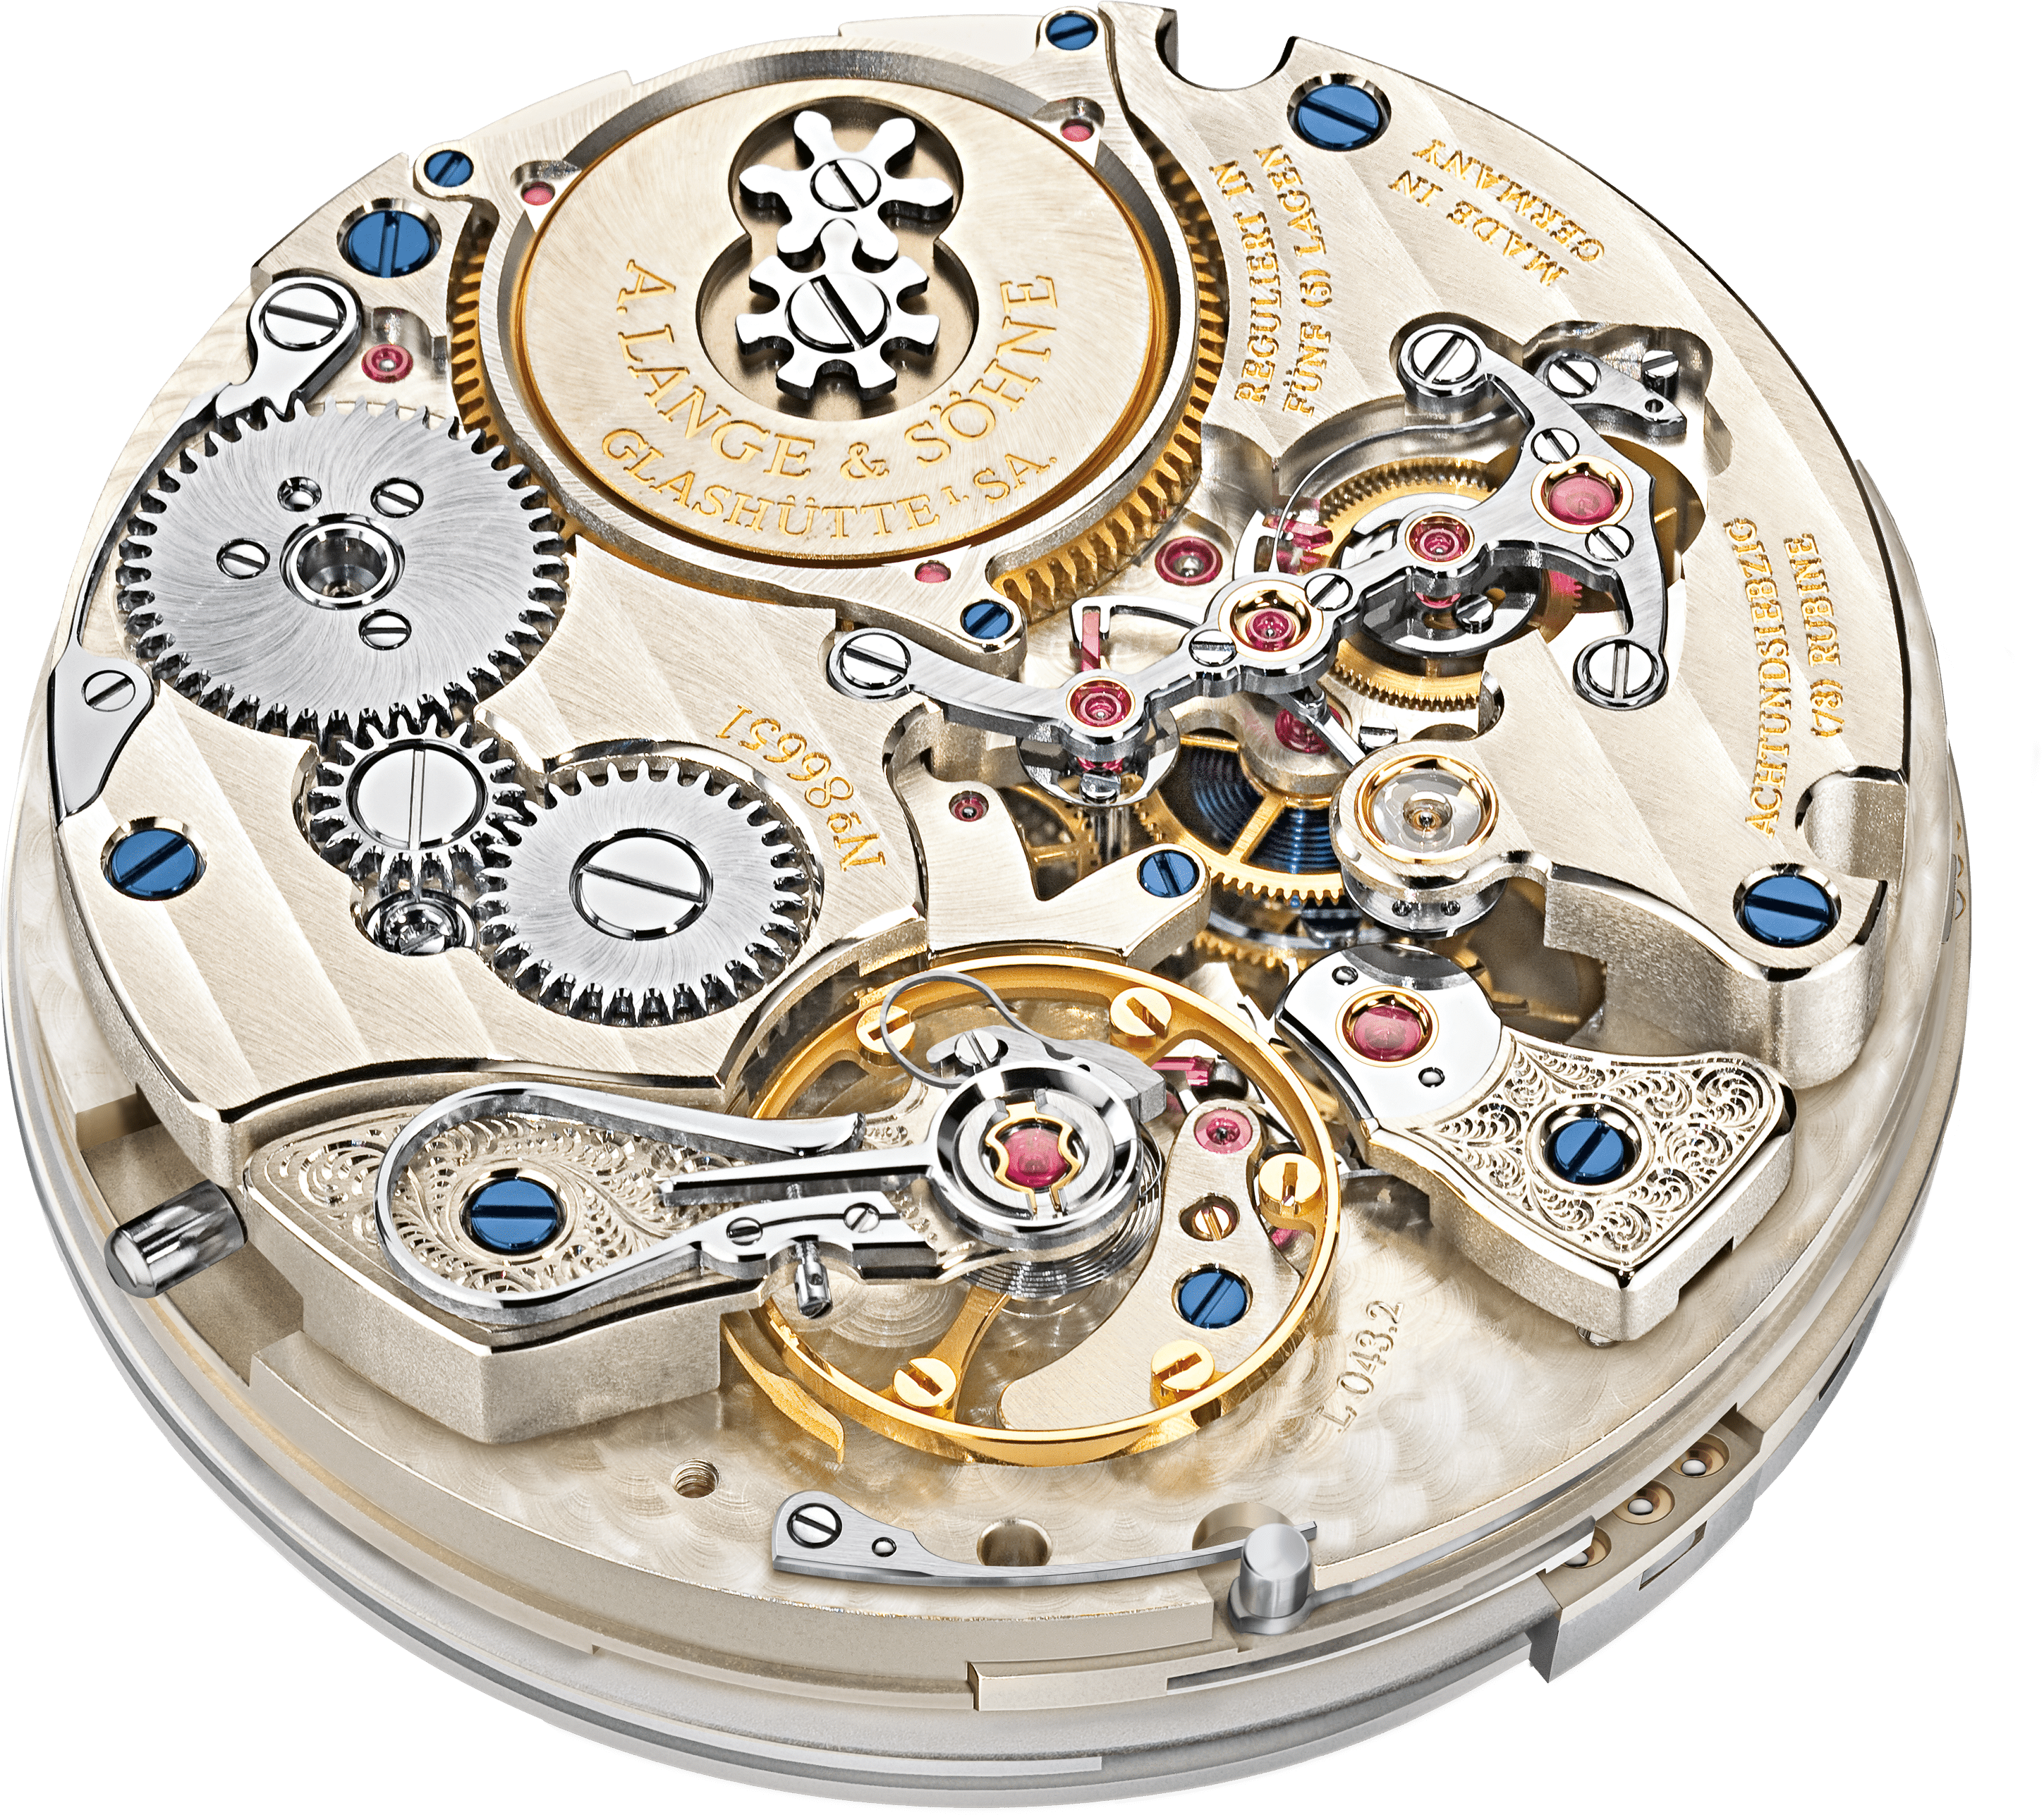 Replica Swiss Watches